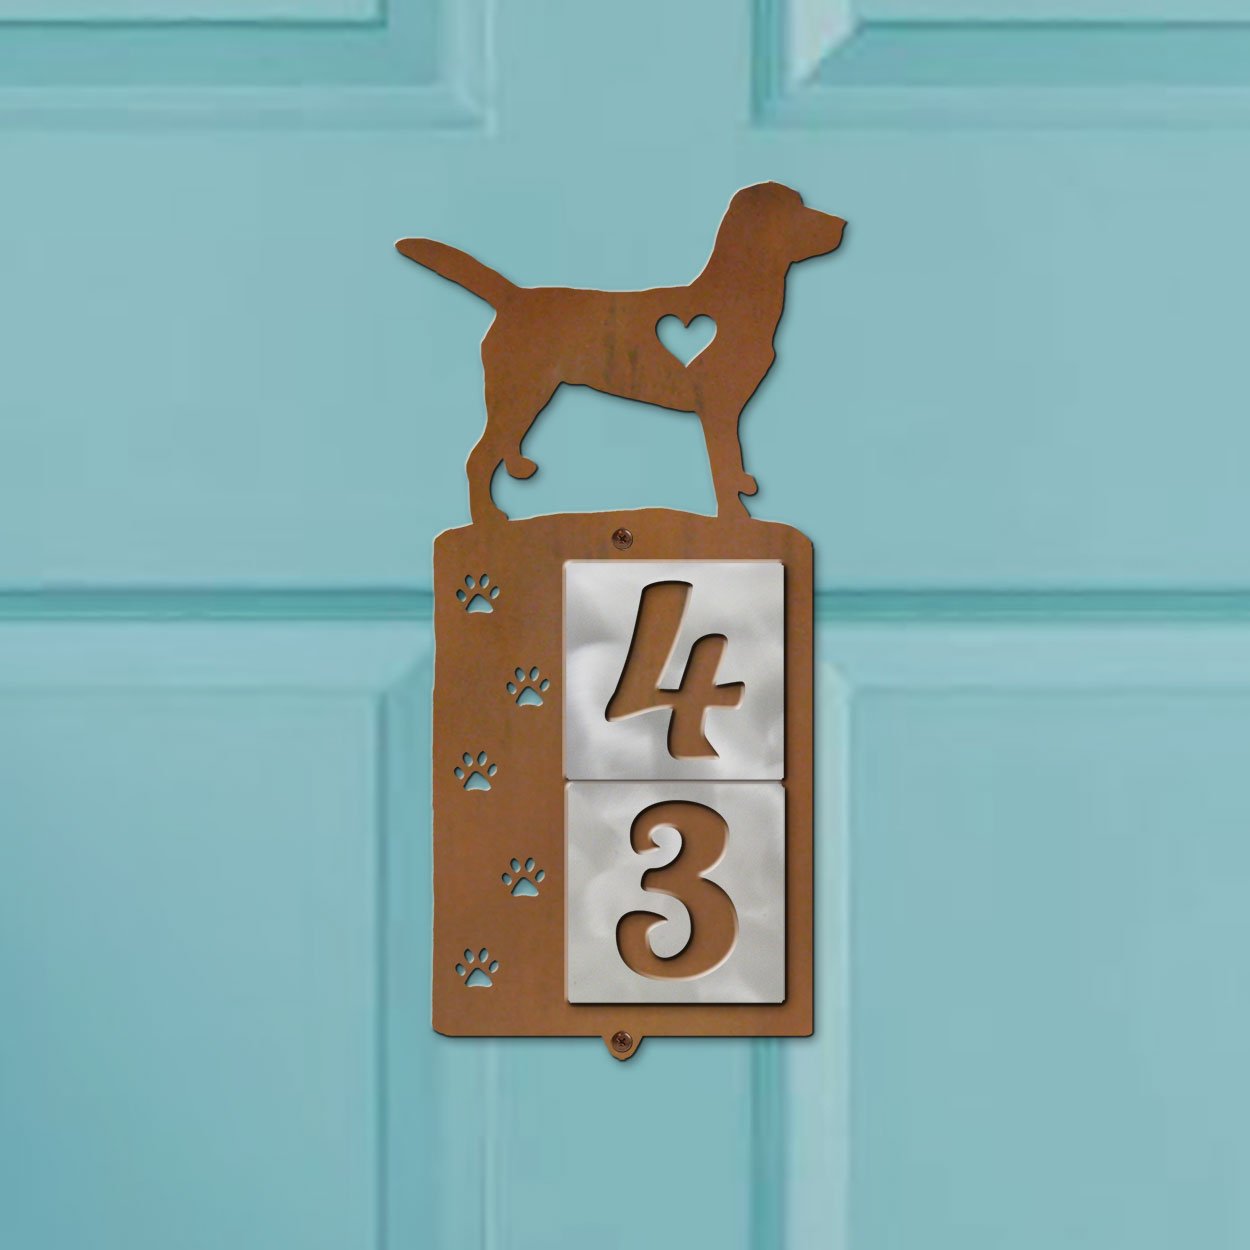 606262 - Labrador Nose Prints 2-Digit Vertical Tile Apartment Numbers